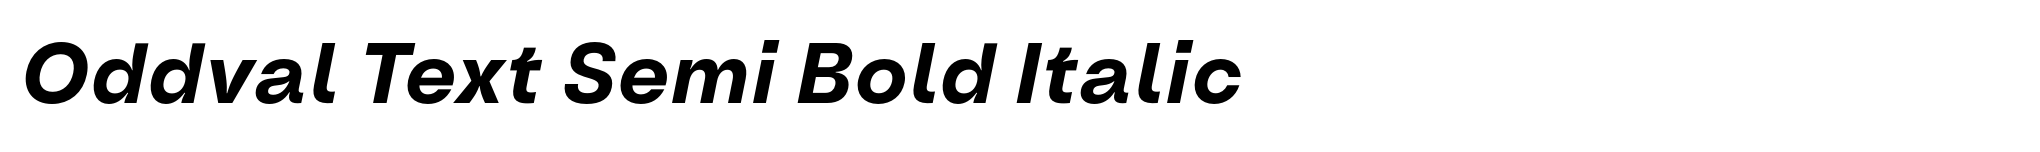 Oddval Text Semi Bold Italic image